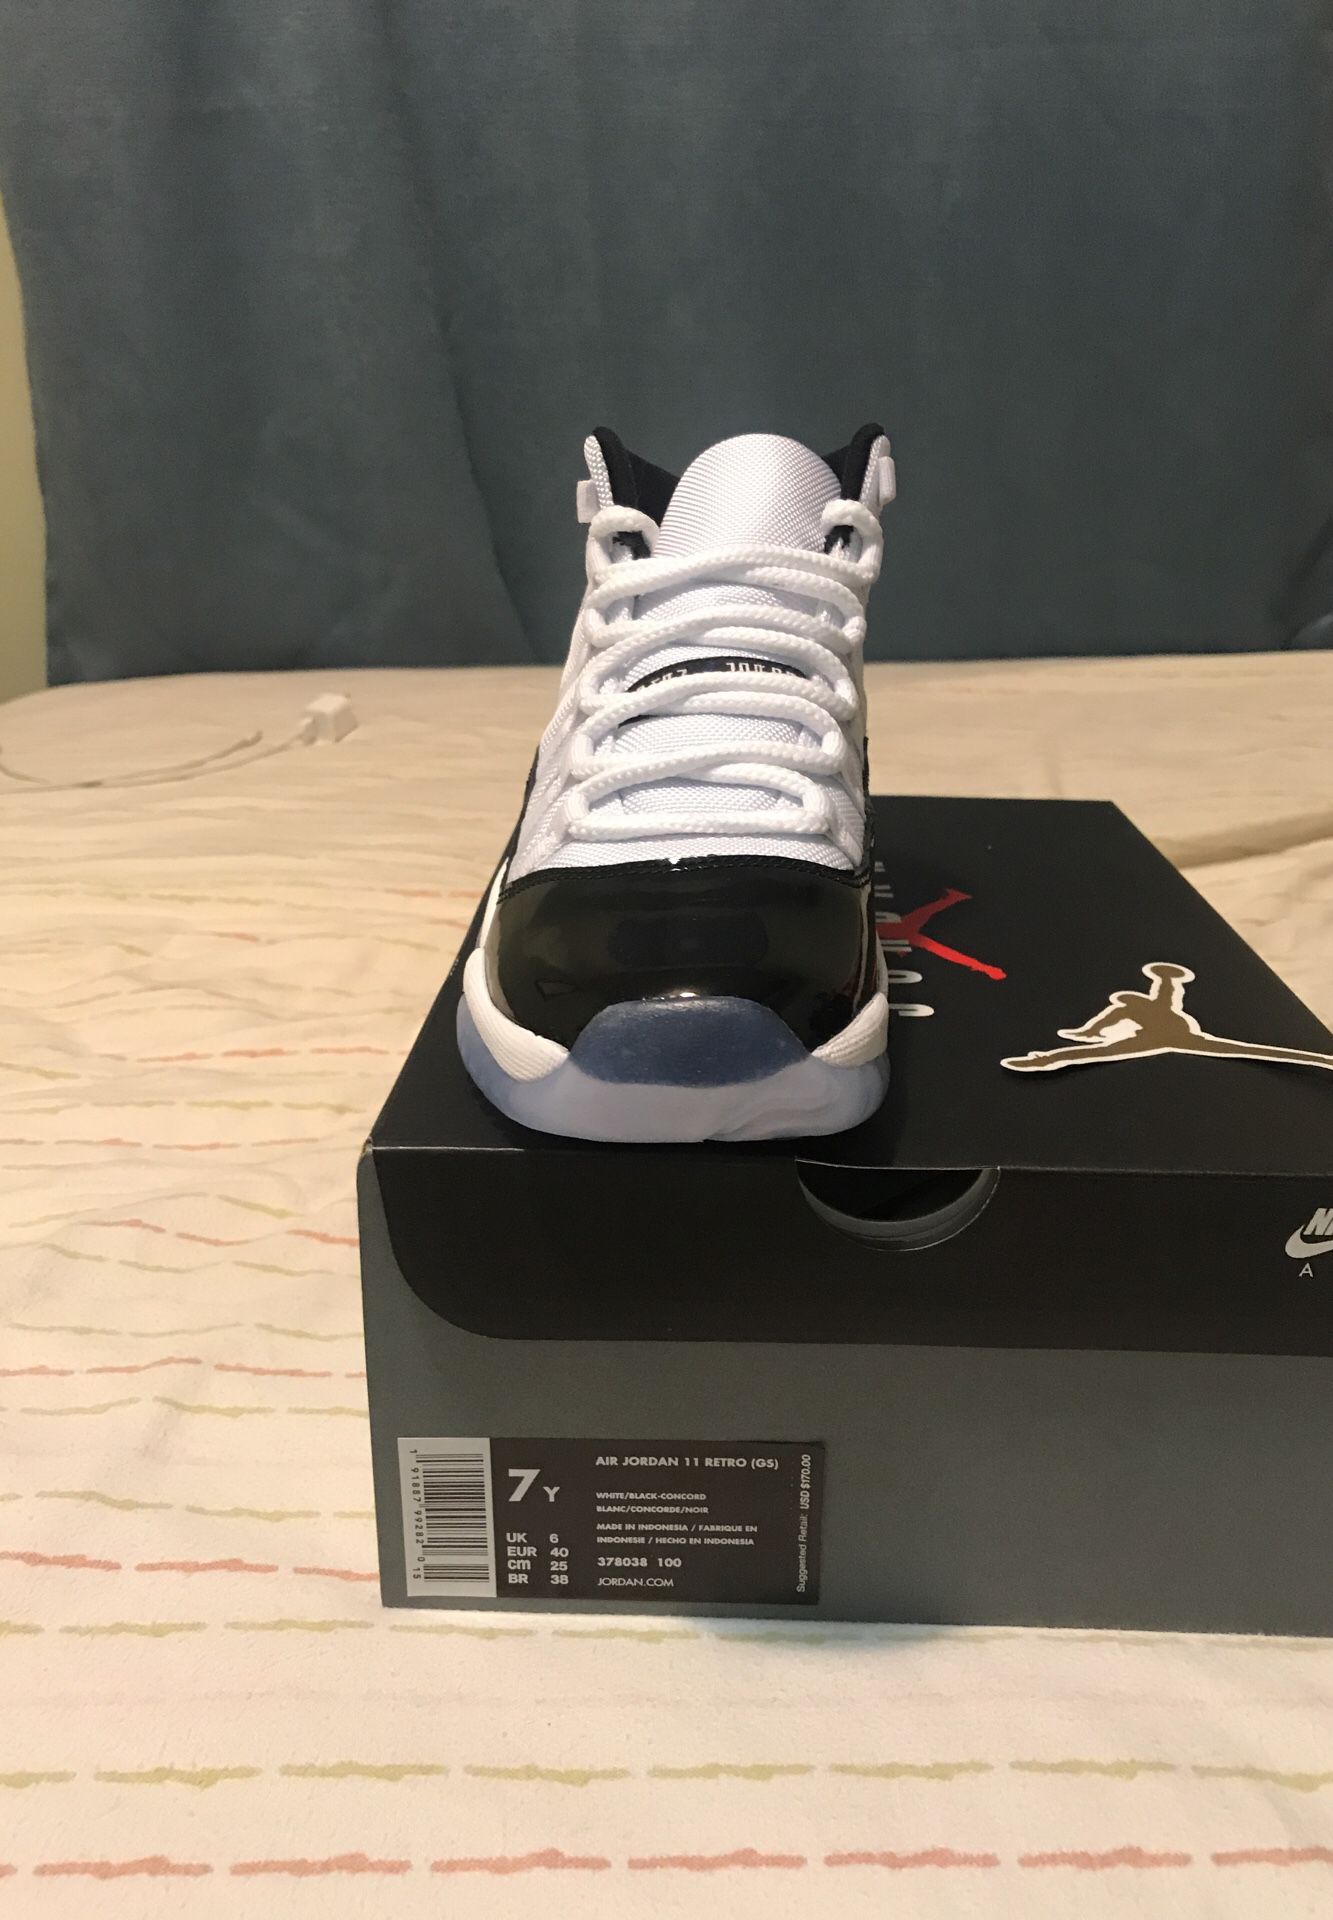 Air Jordan 11 size 7